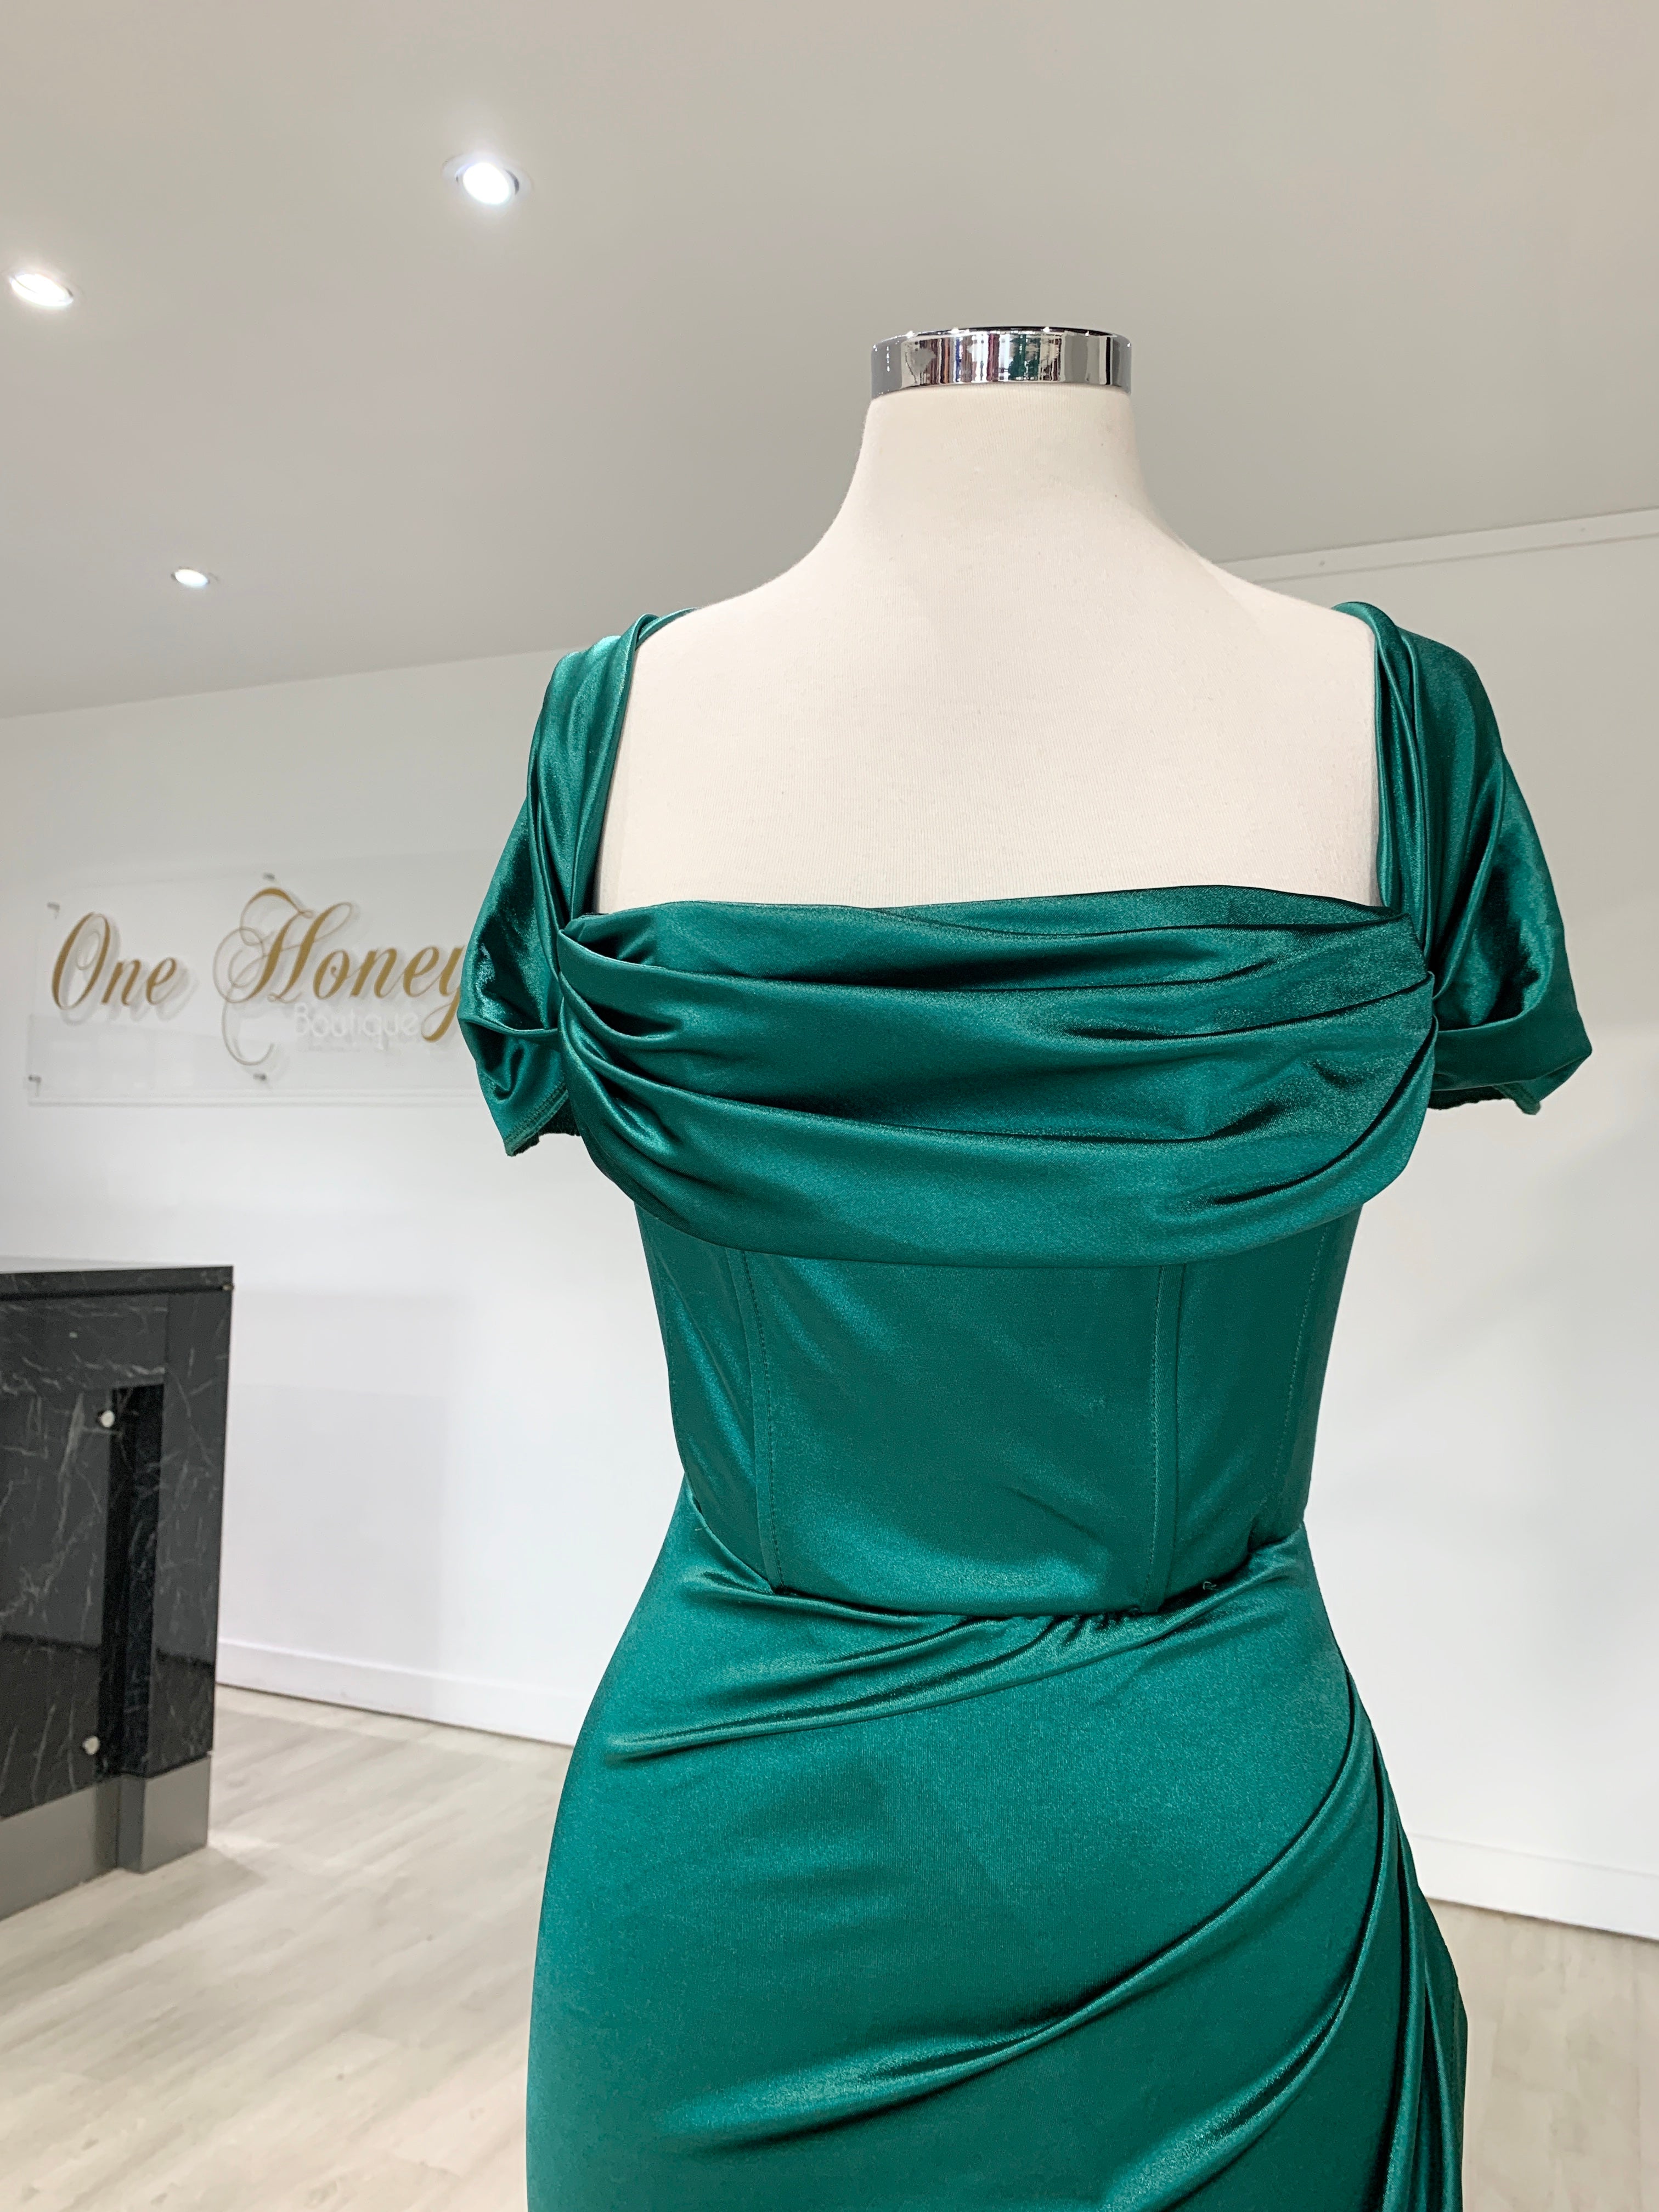 Honey Couture ESMERELDA Emerald Green Formal Dress {vendor} AfterPay Humm ZipPay LayBuy Sezzle